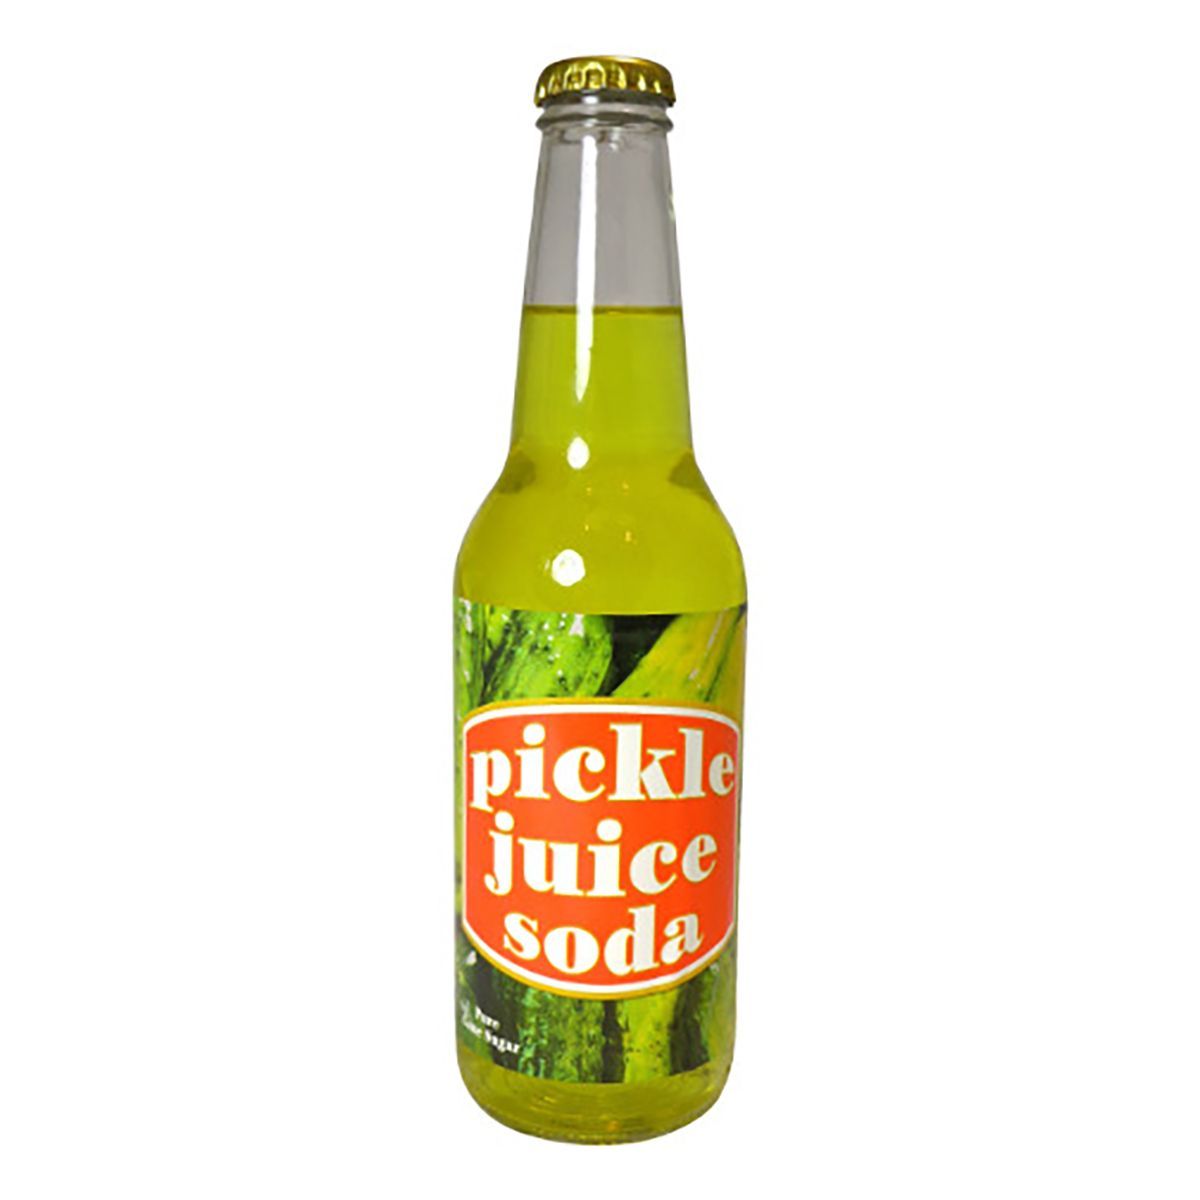 Pickle juiced1234